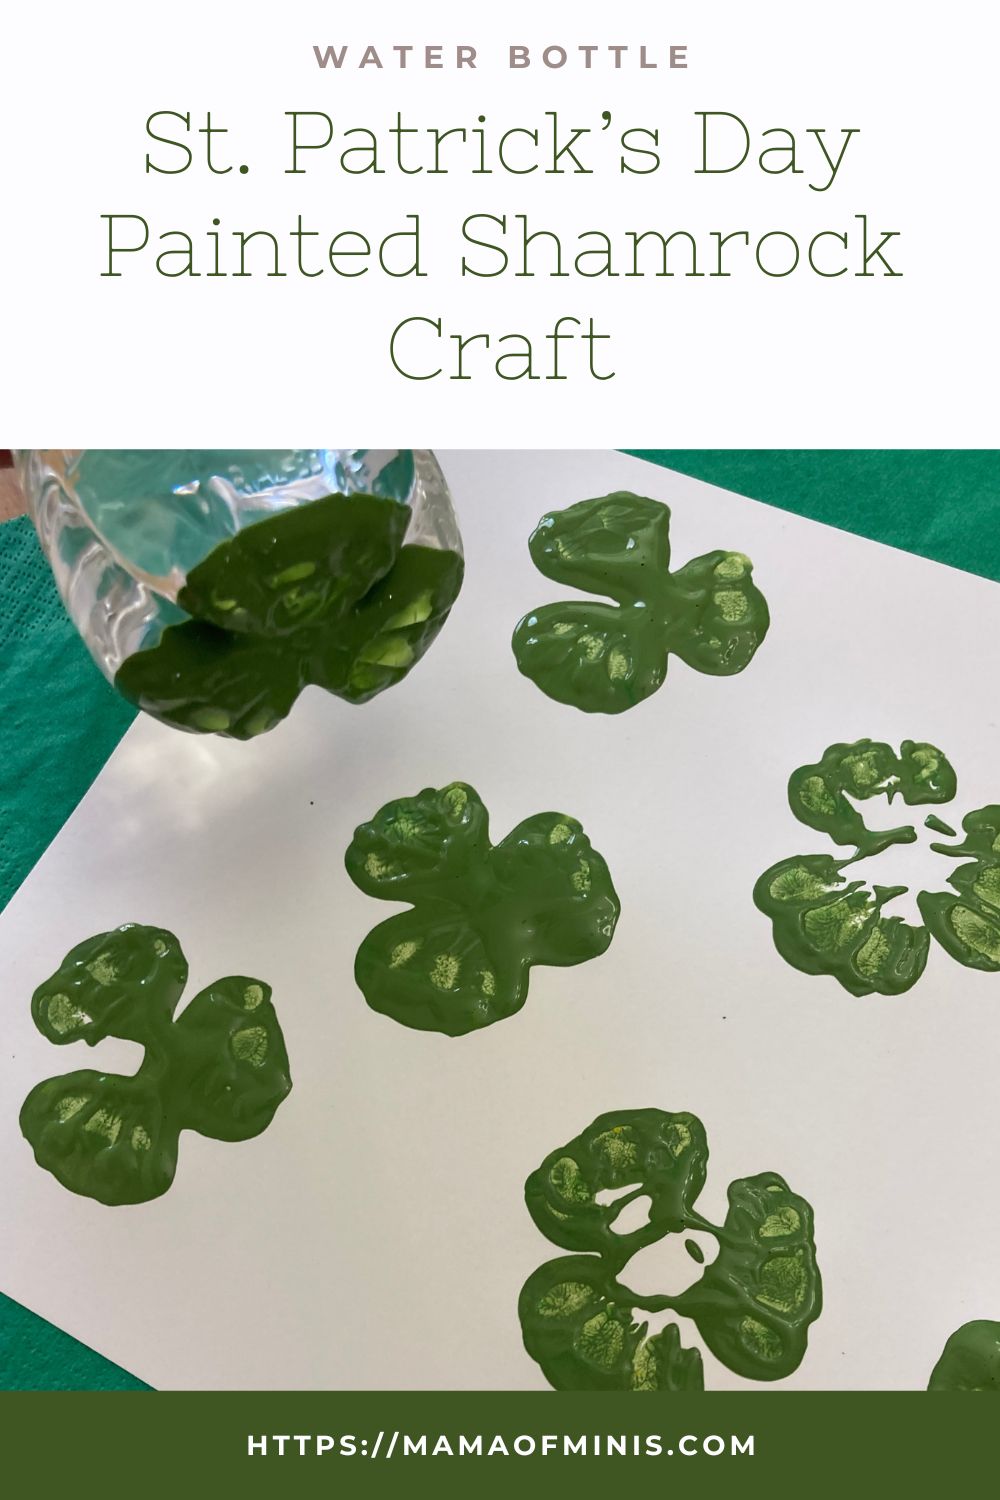 St. Patrick's Day Painted Shamrock Craft